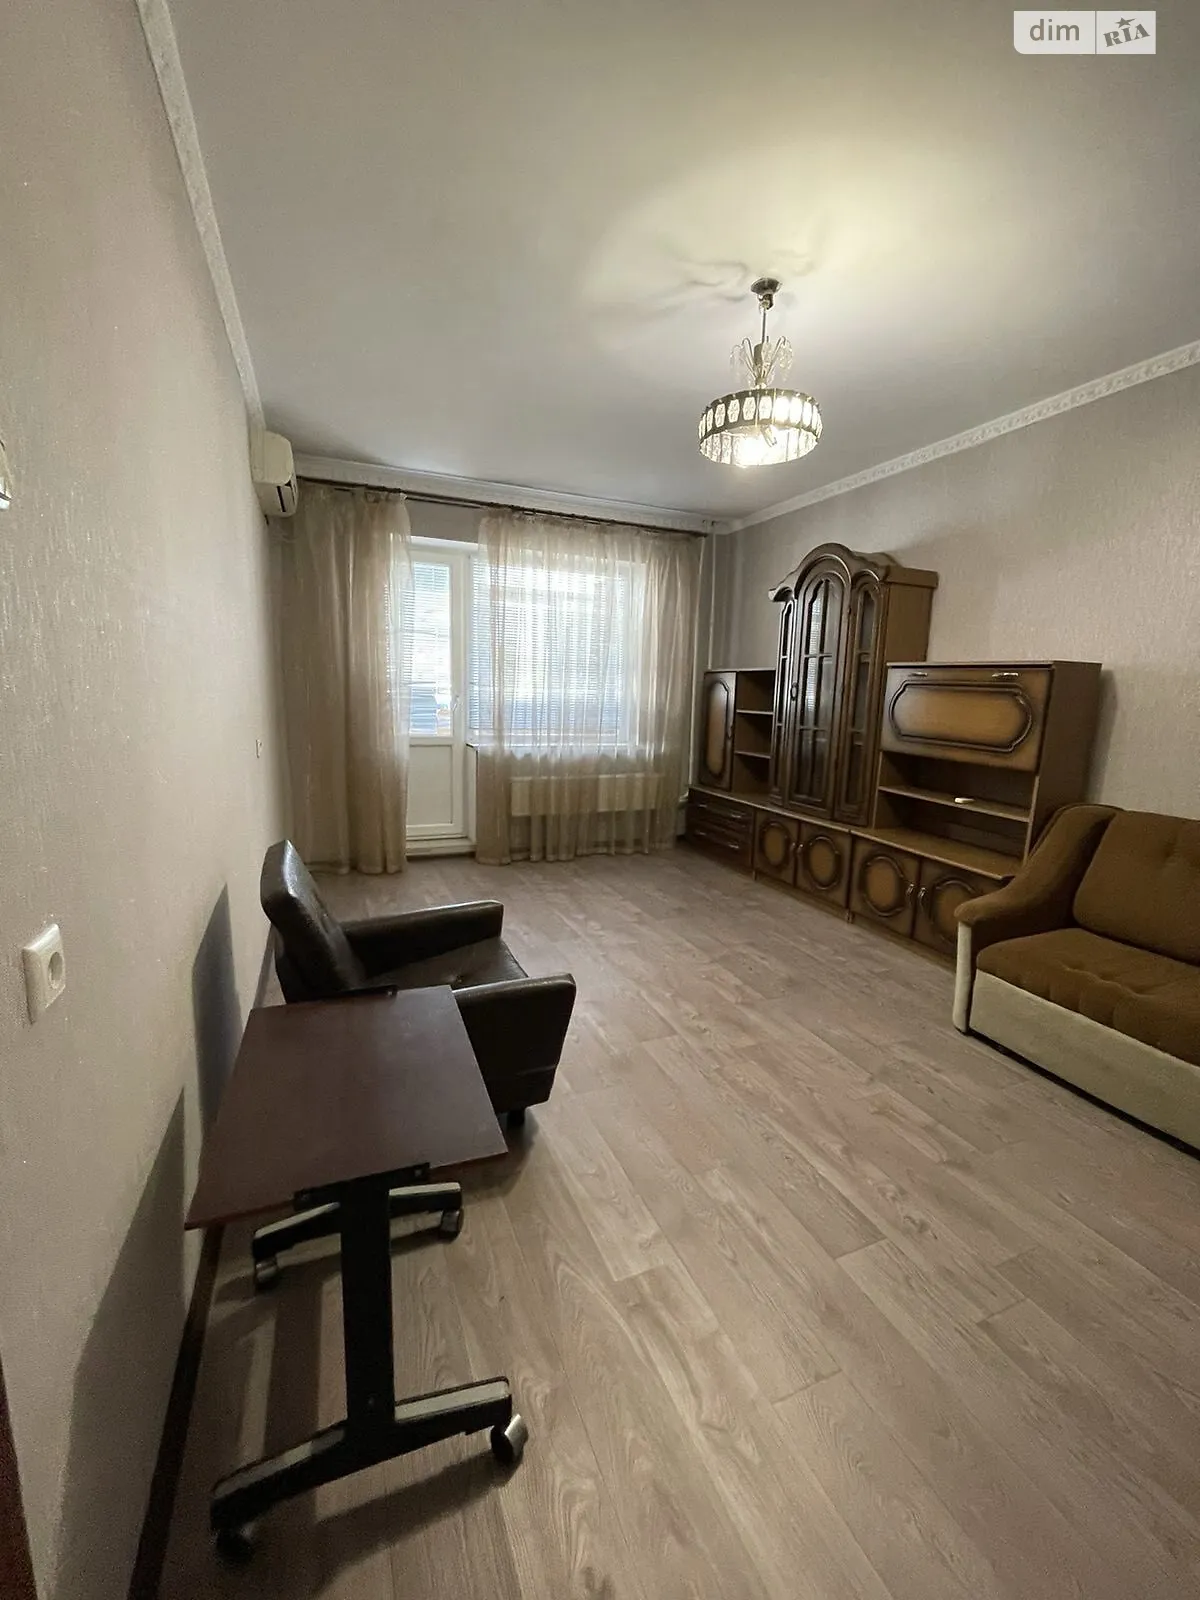 Сдается в аренду 2-комнатная квартира 54.5 кв. м в Николаеве - фото 2